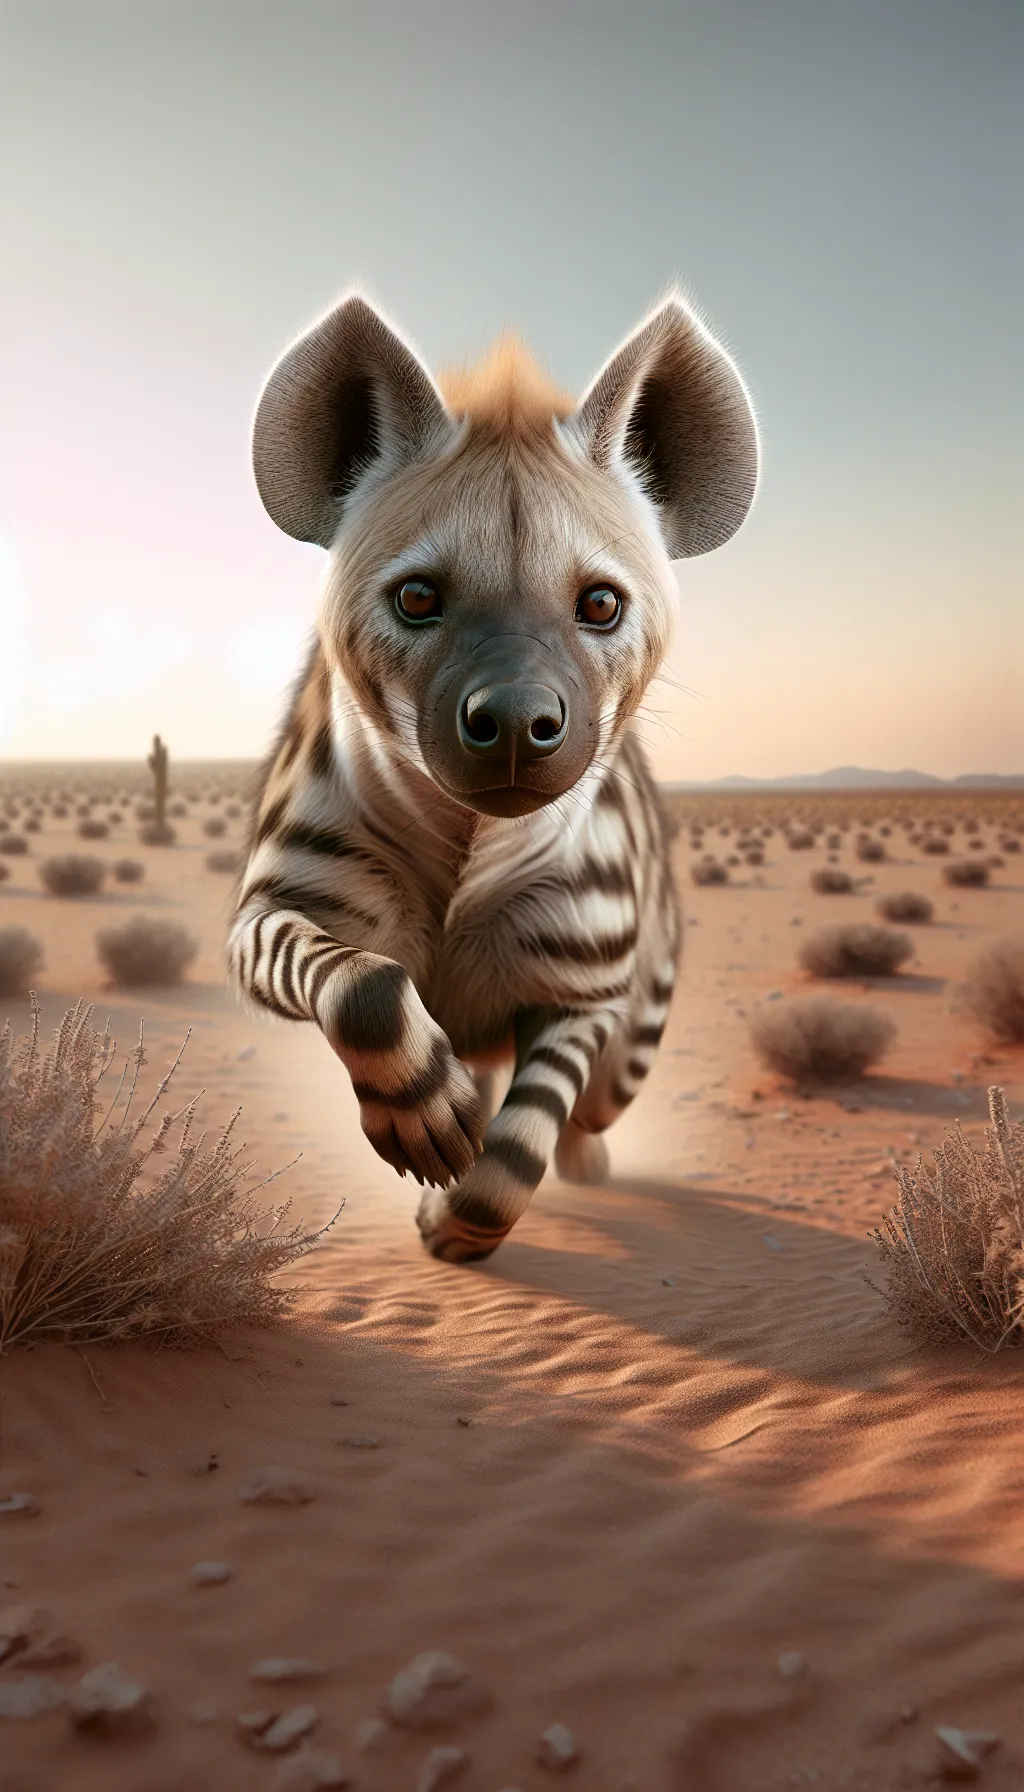 Striped Hyena - Animal Matchup